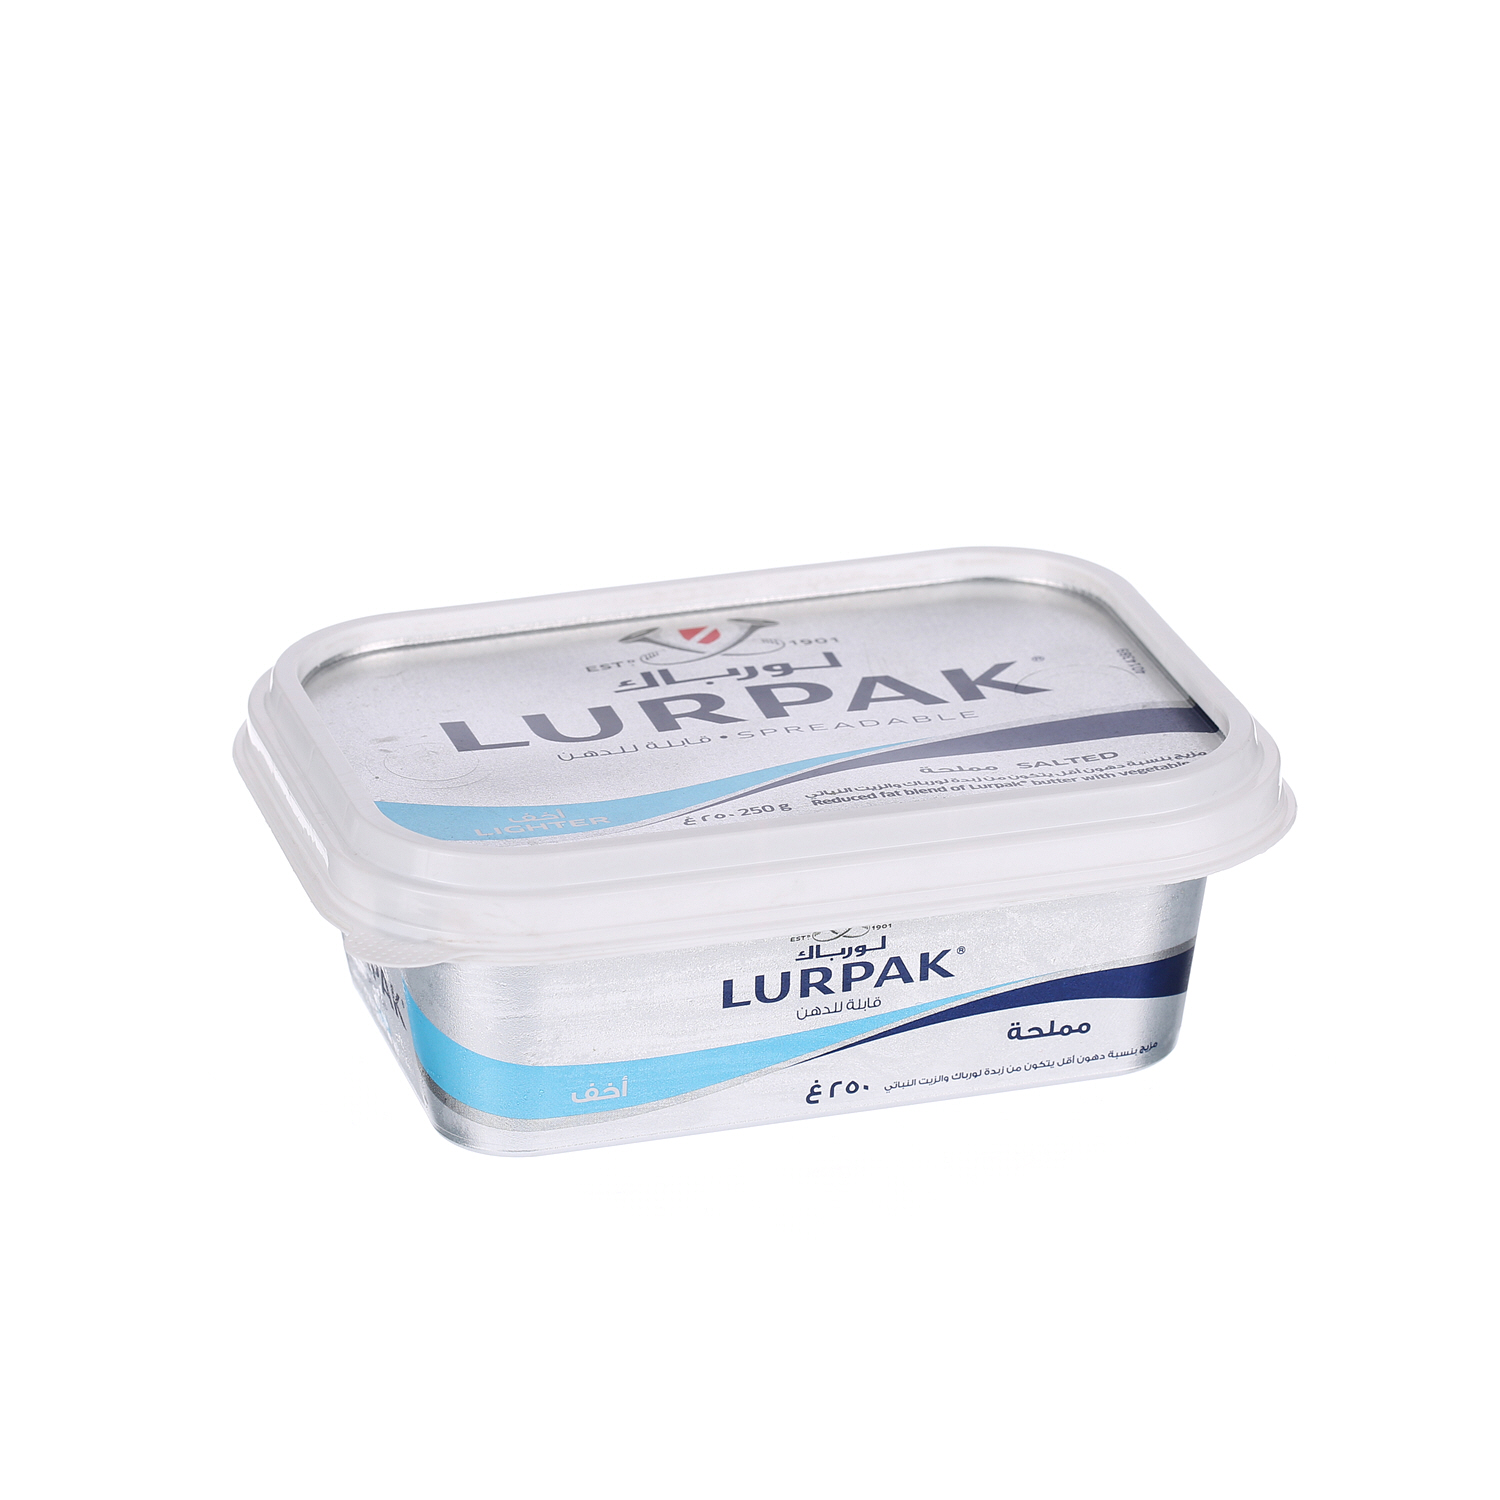 Lurpak Butter Spreadable Light Salted 250gm